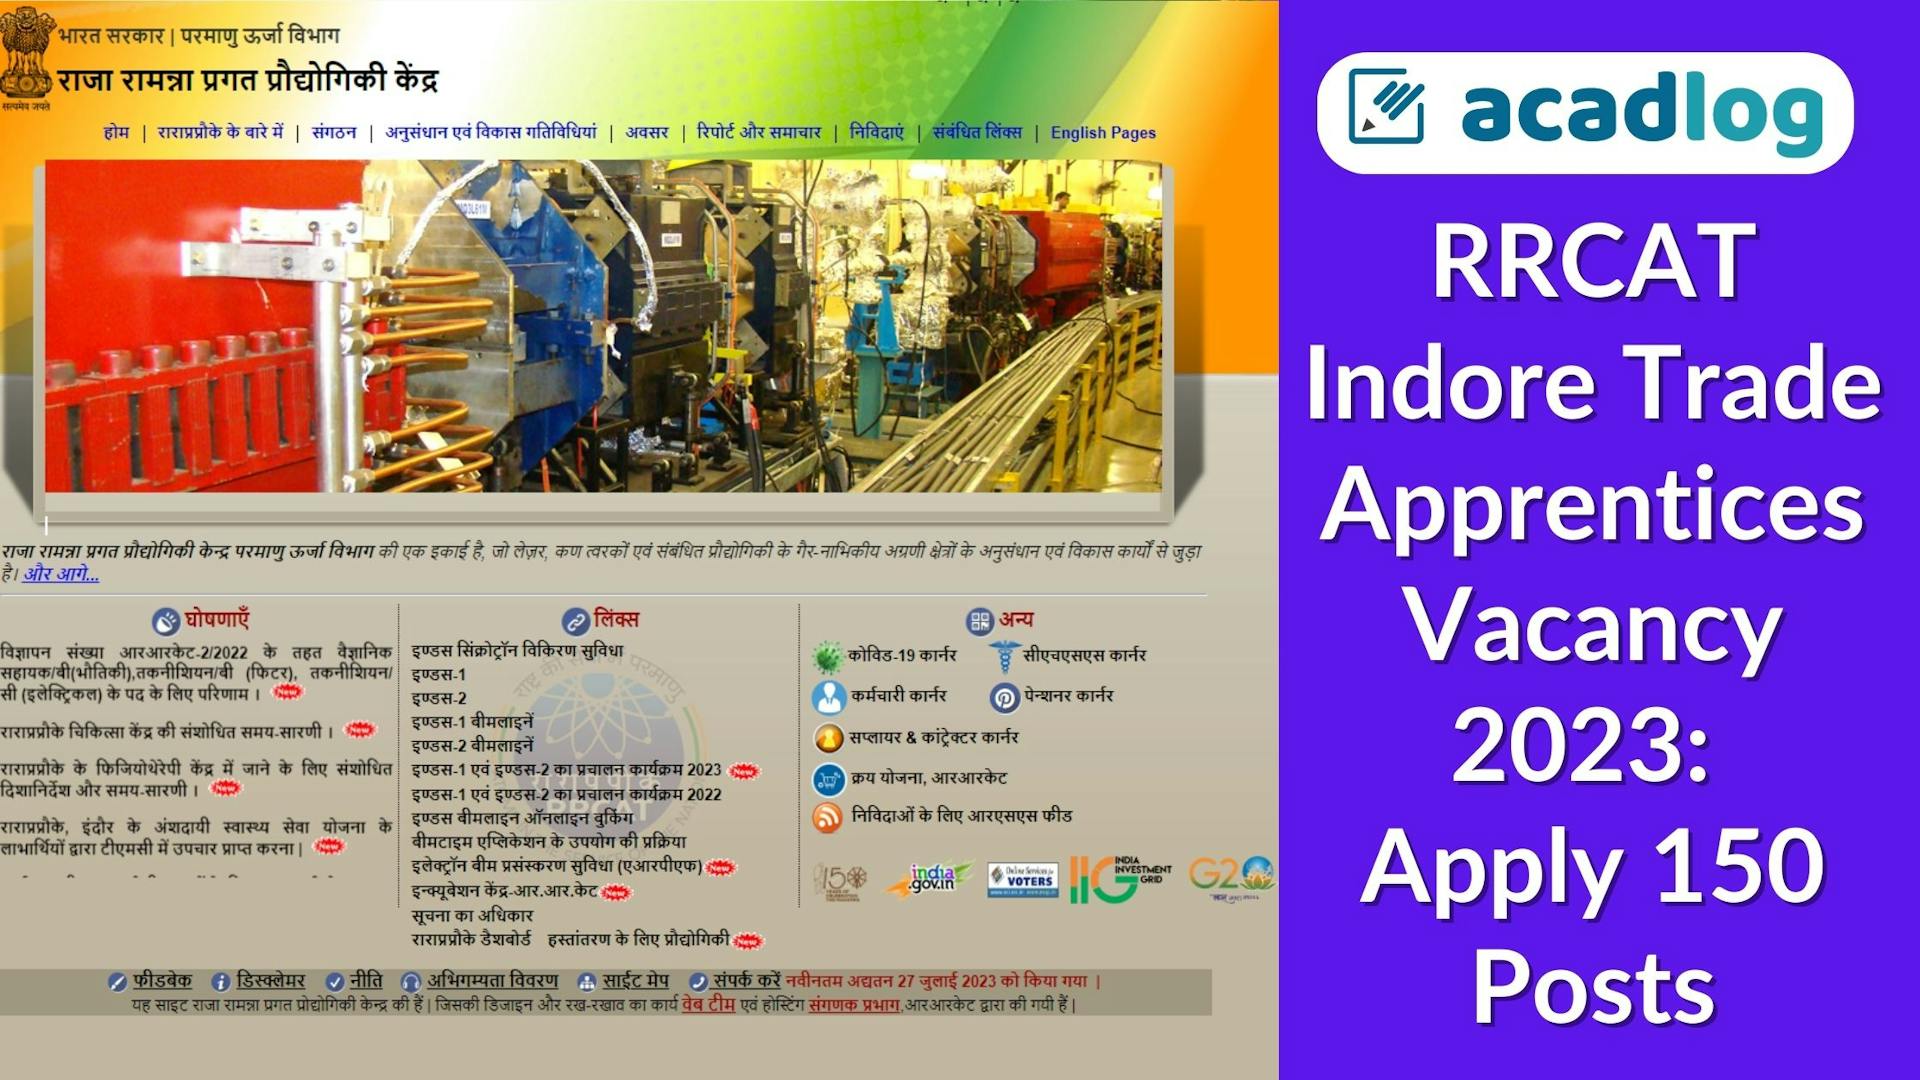 RRCAT Indore Trade Apprentices Vacancy 2023: Apply 150 Posts